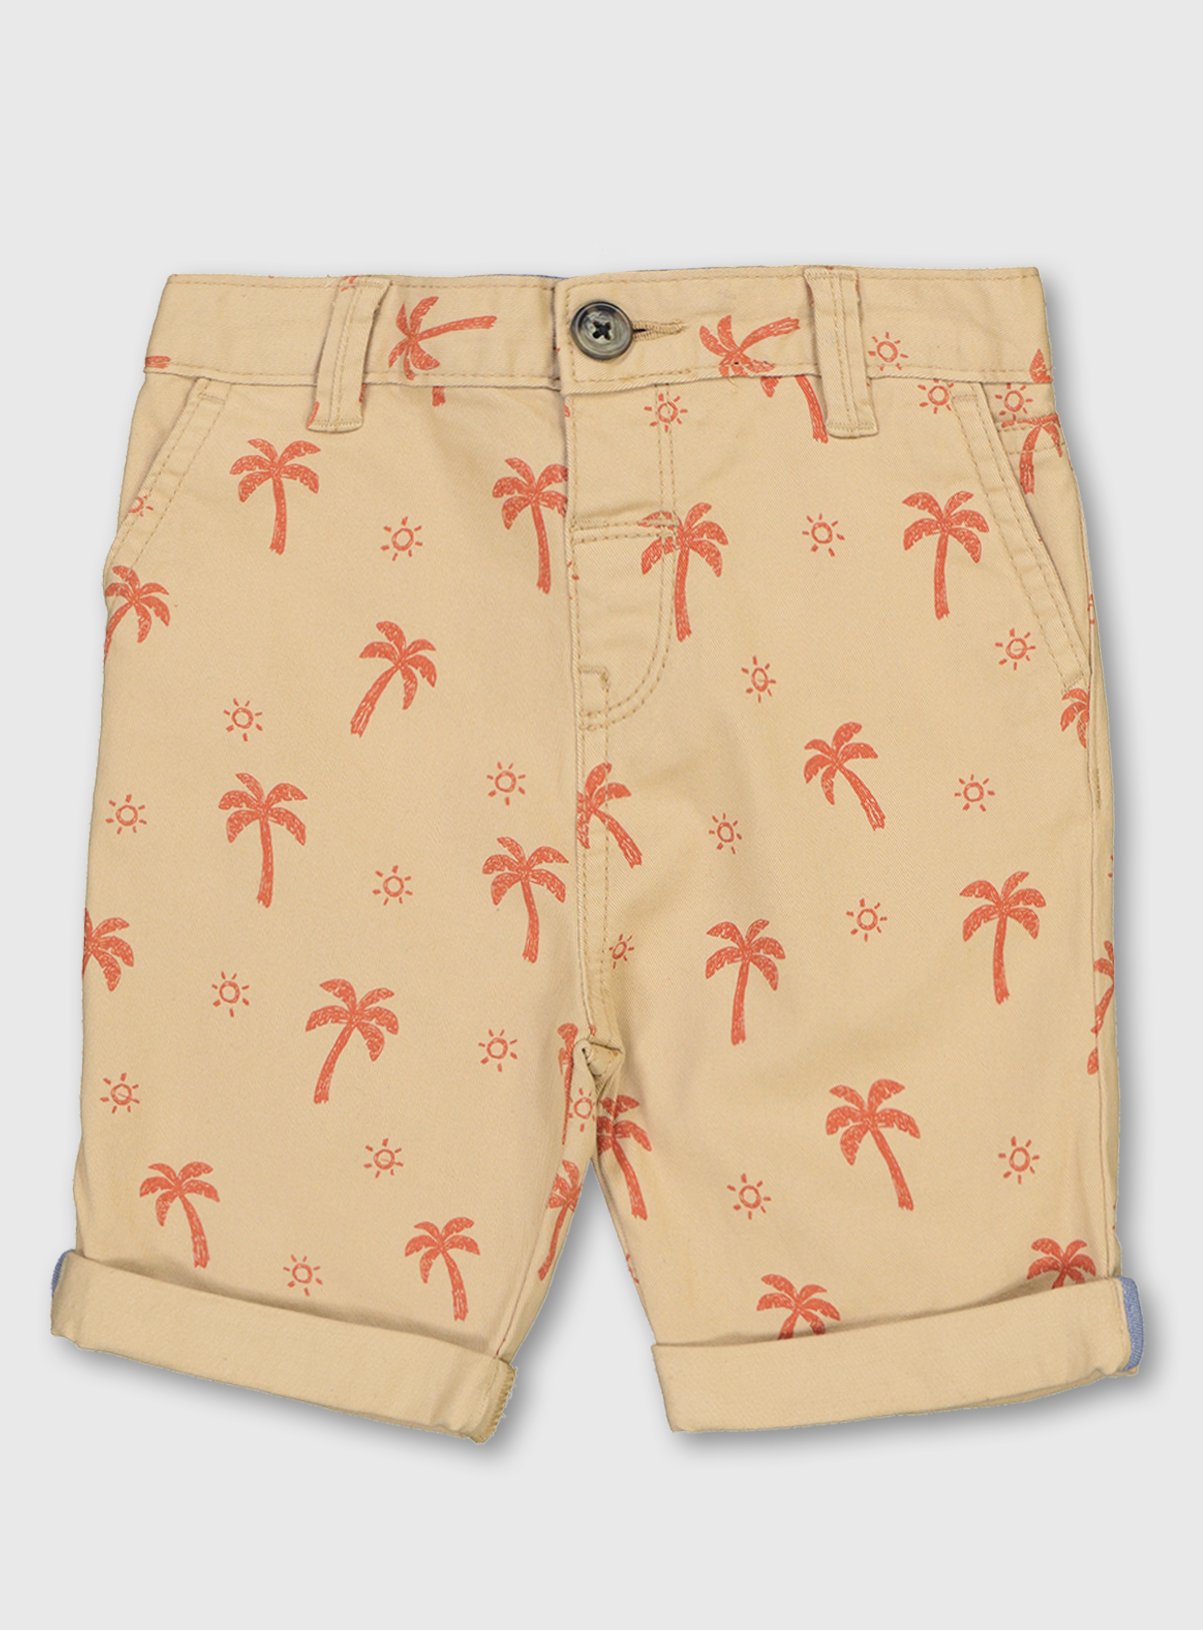 Palm Print Chino Shorts Review